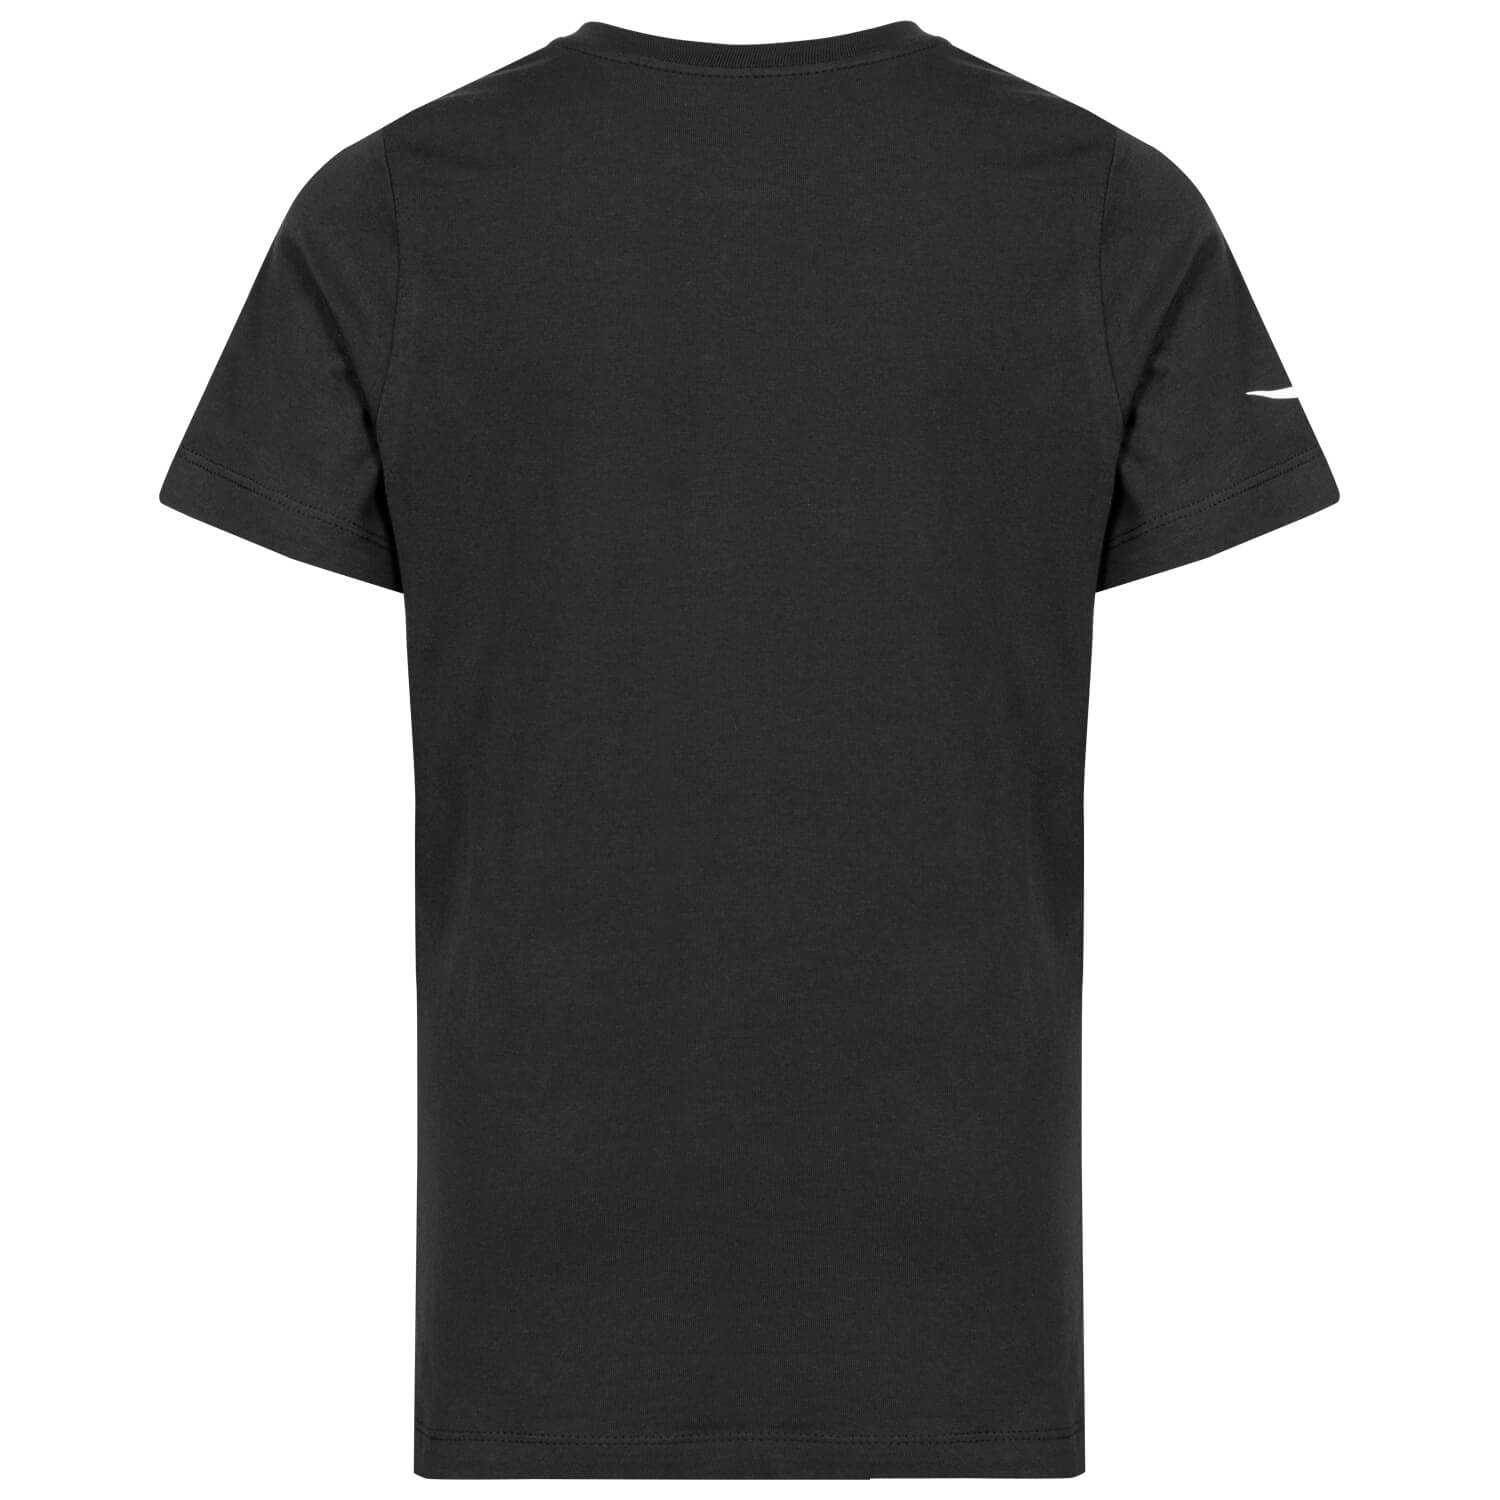 Bild 2: Nike Kids T-Shirt Basic schwarz